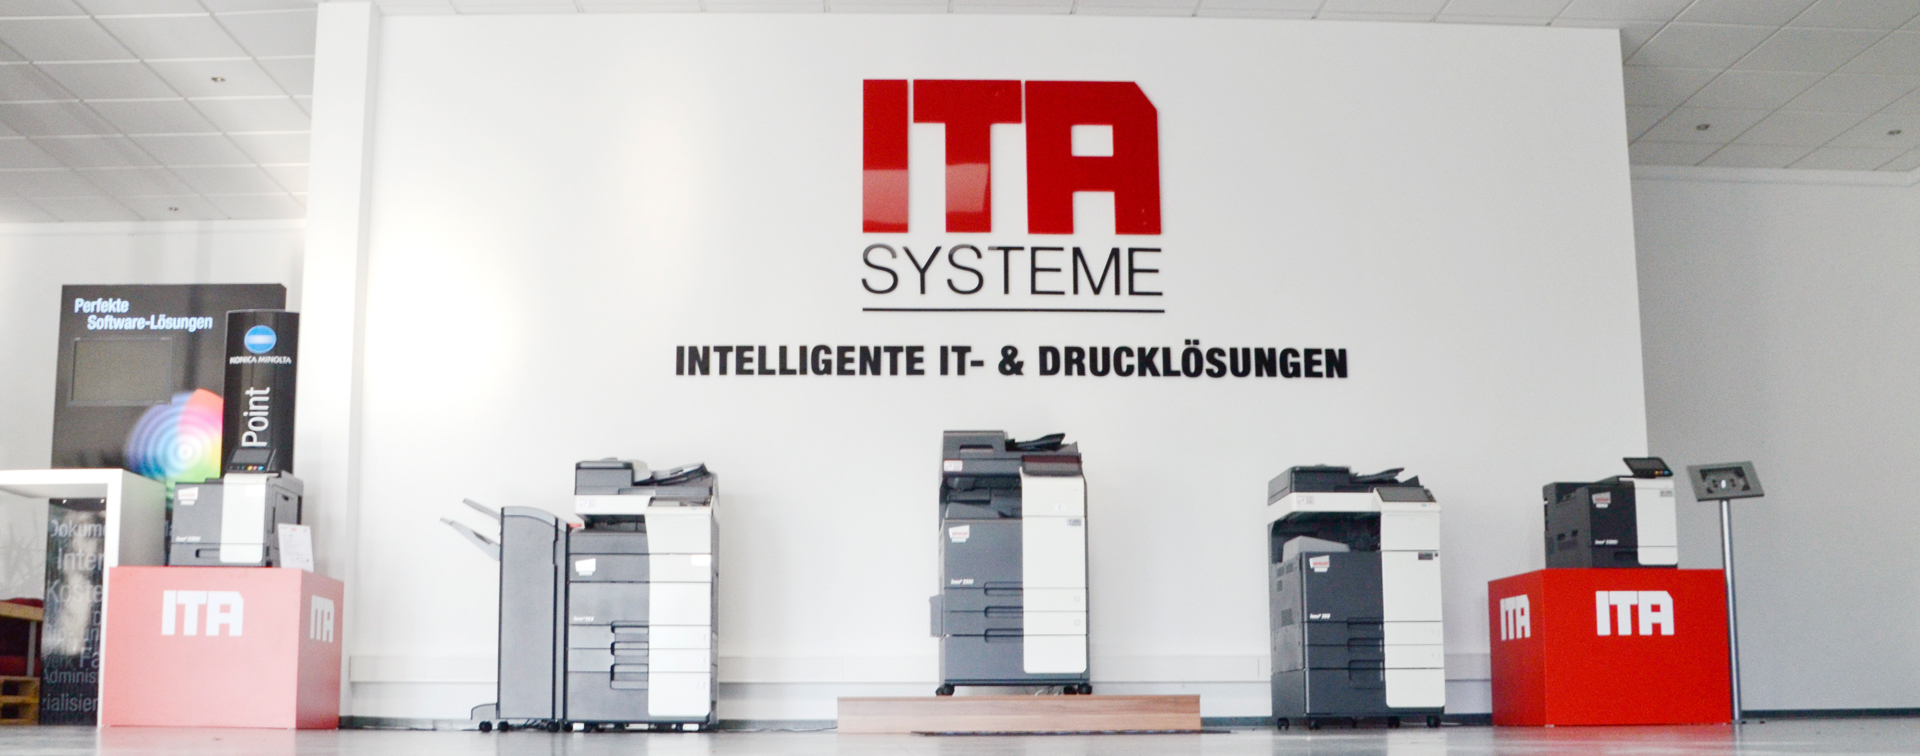 ita-systeme-intelligent